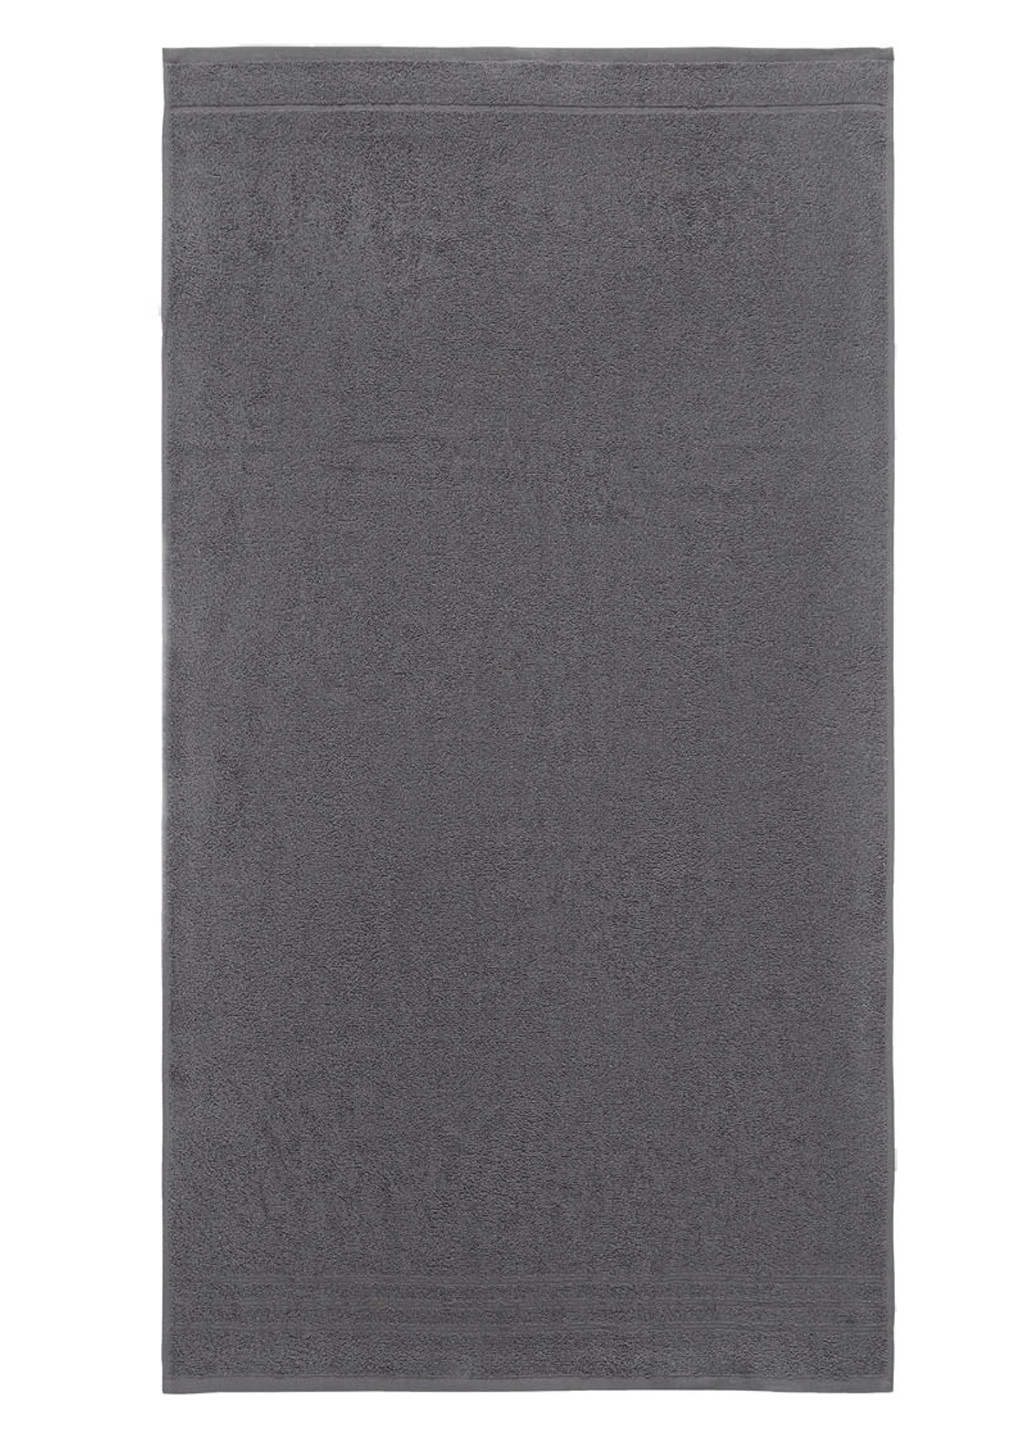 Livarno home полотенца (12 шт) темно-серый производство - Германия